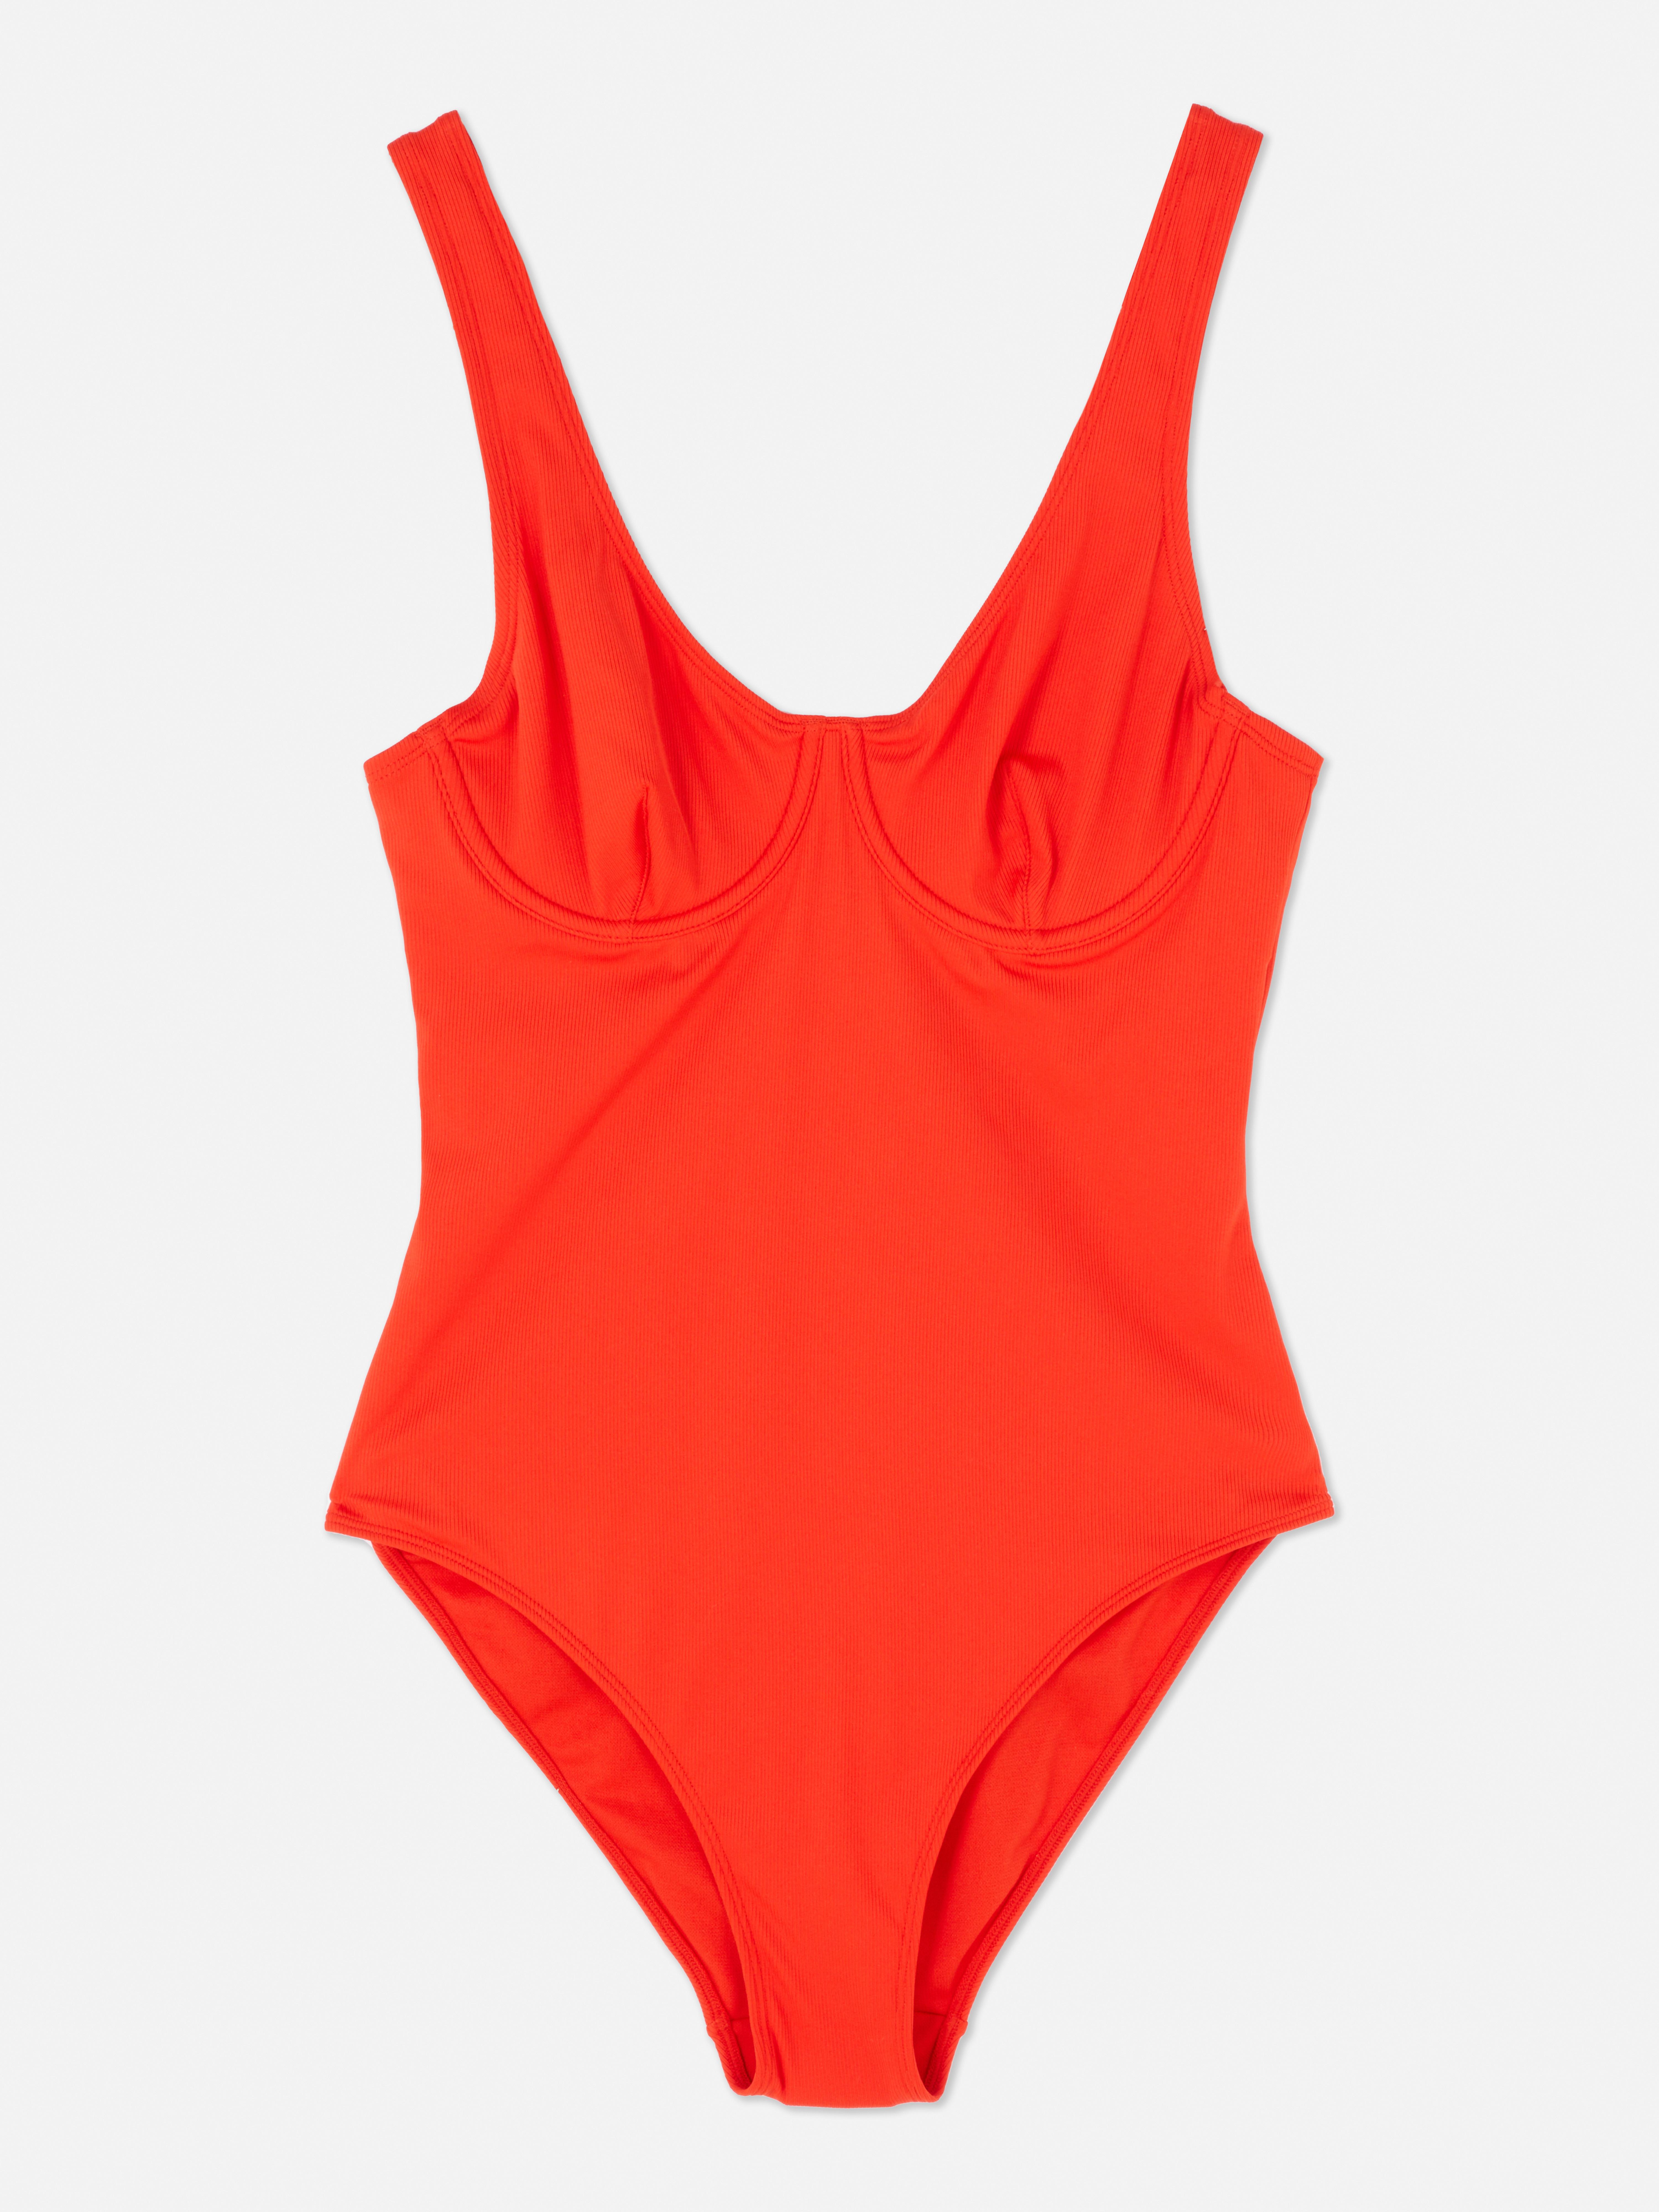 Women's red swimsuit